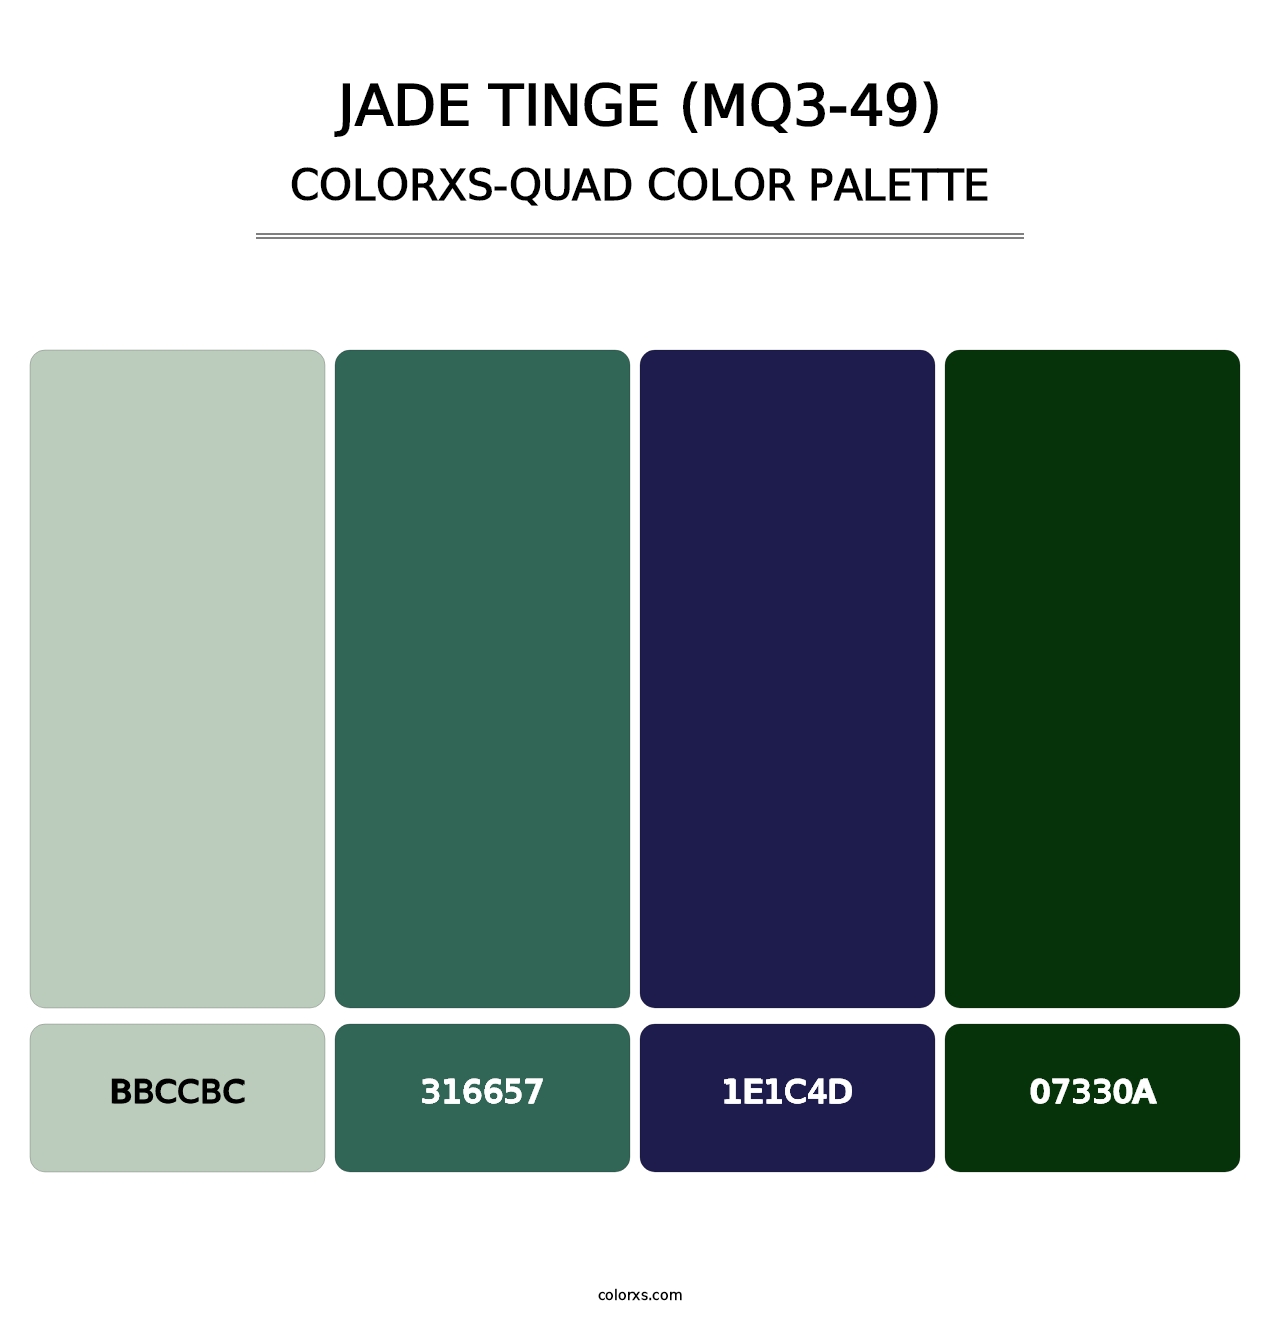 Jade Tinge (MQ3-49) - Colorxs Quad Palette